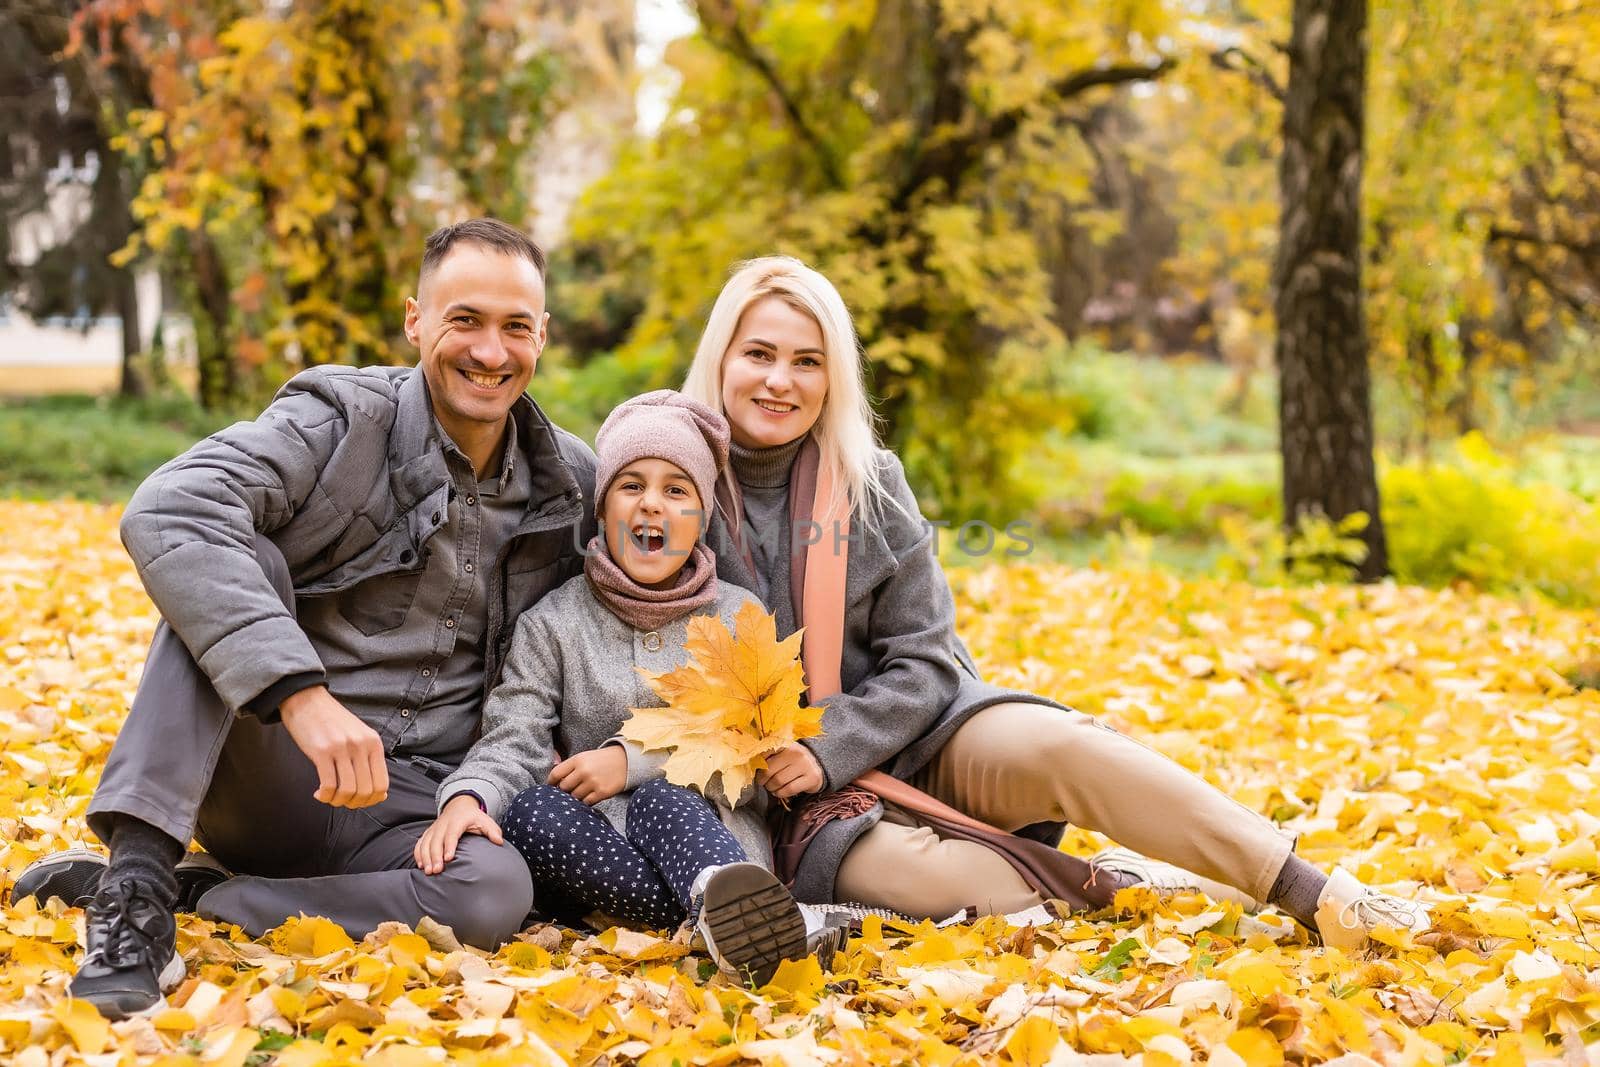 A Family of four enjoying golden leaves in autumn park.